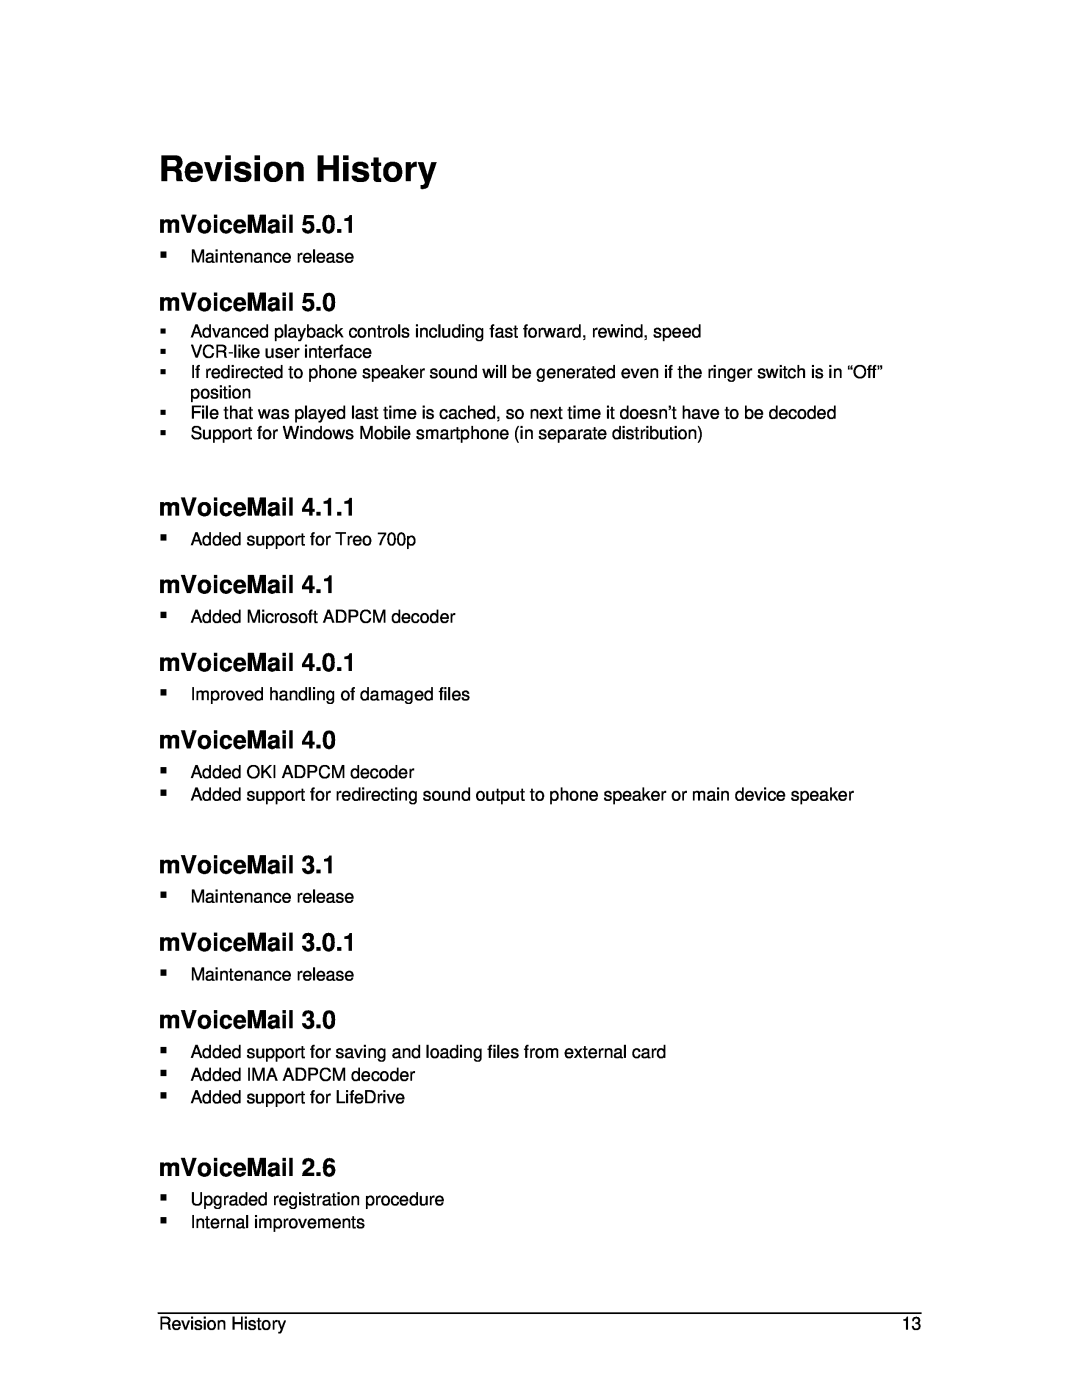 Motorola motorola user manual Revision History, mVoiceMail 